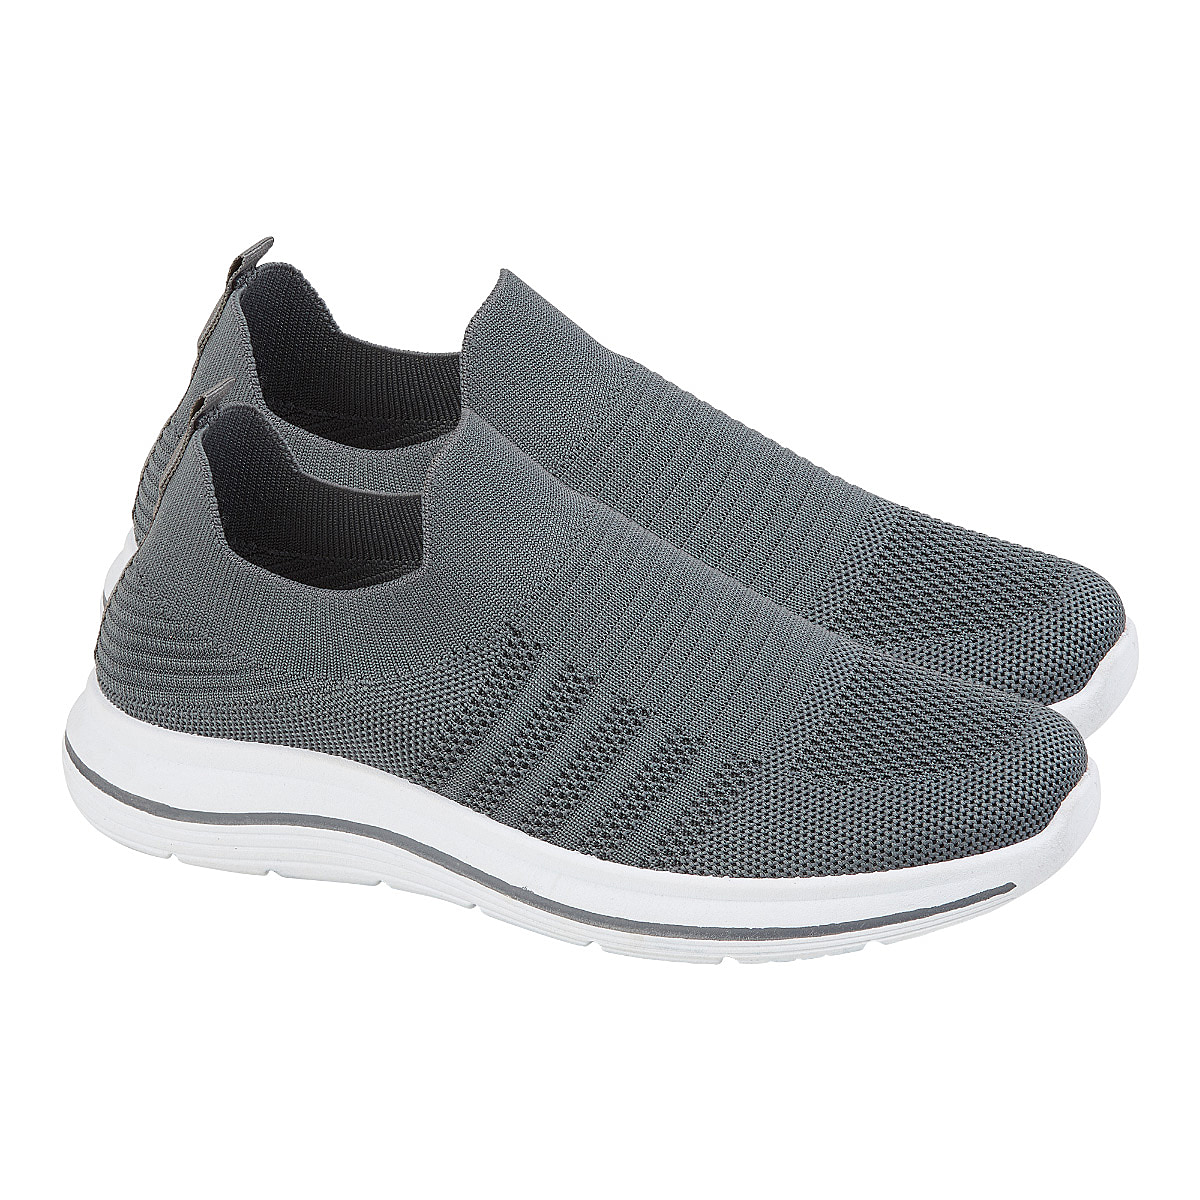 Mens-Shoe-Size-8-Grey